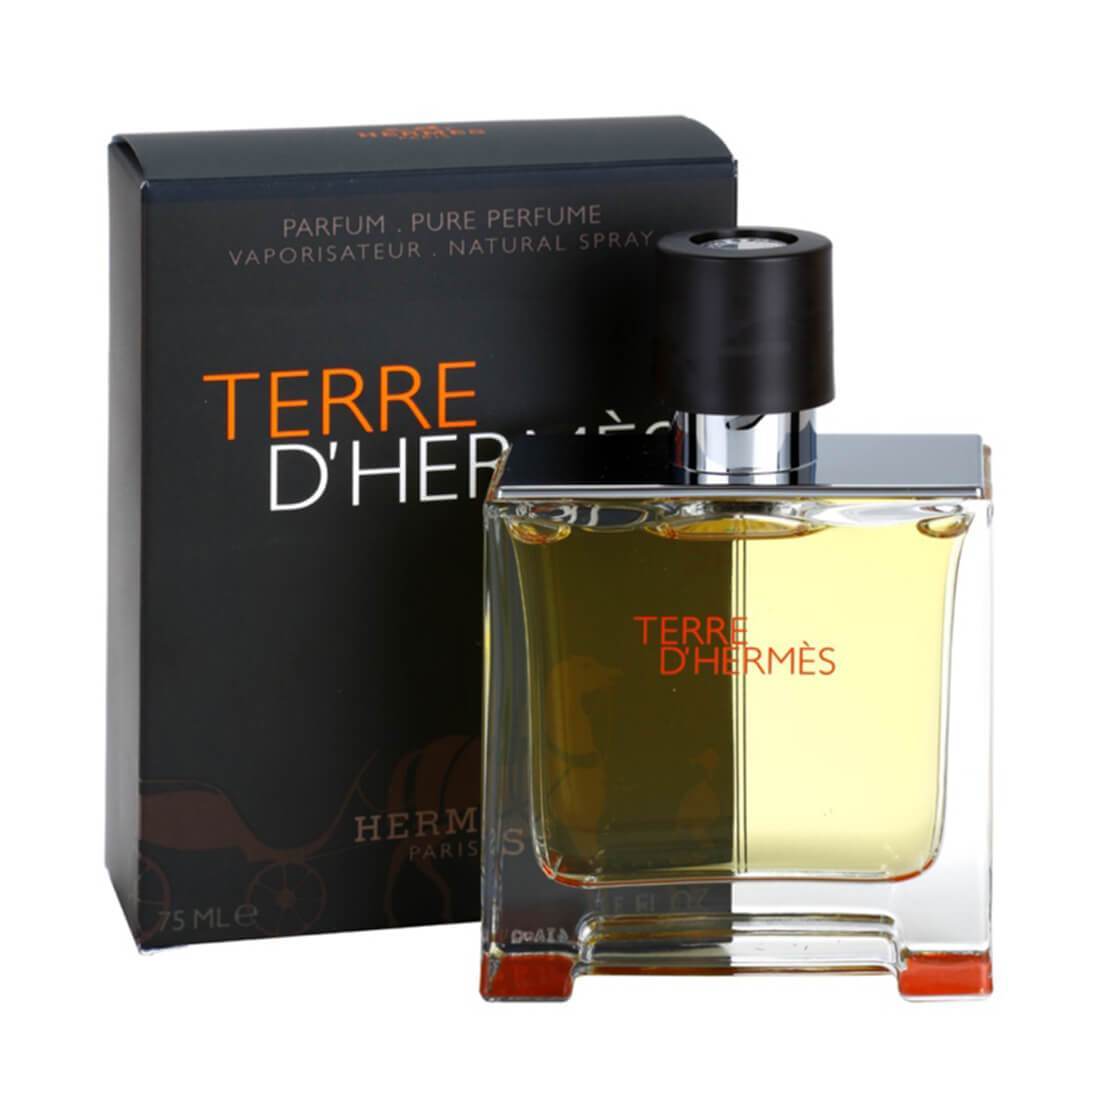 perfume hermes man